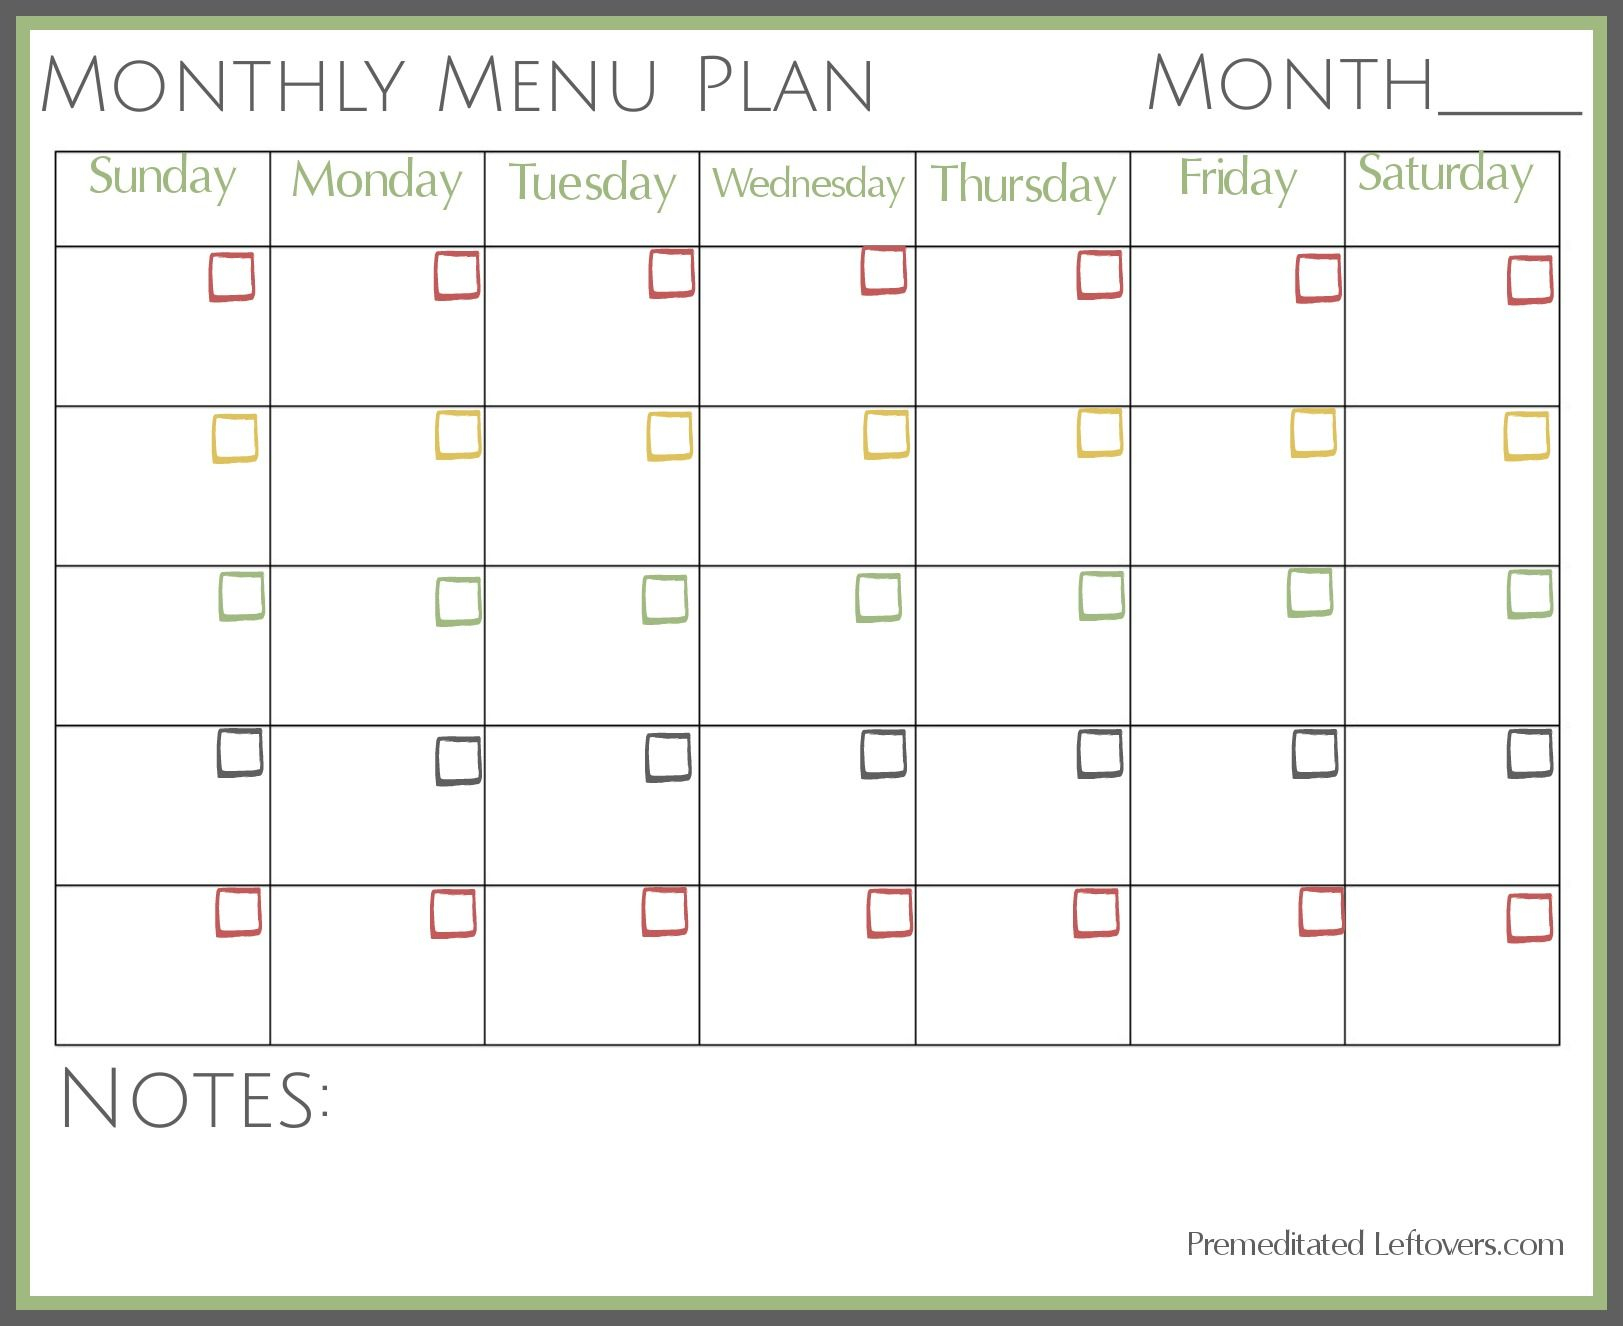 Free Printable Monthly Menu Plan | Printable Forms, Etc. | Pinterest - Free Printable Monthly Meal Planner